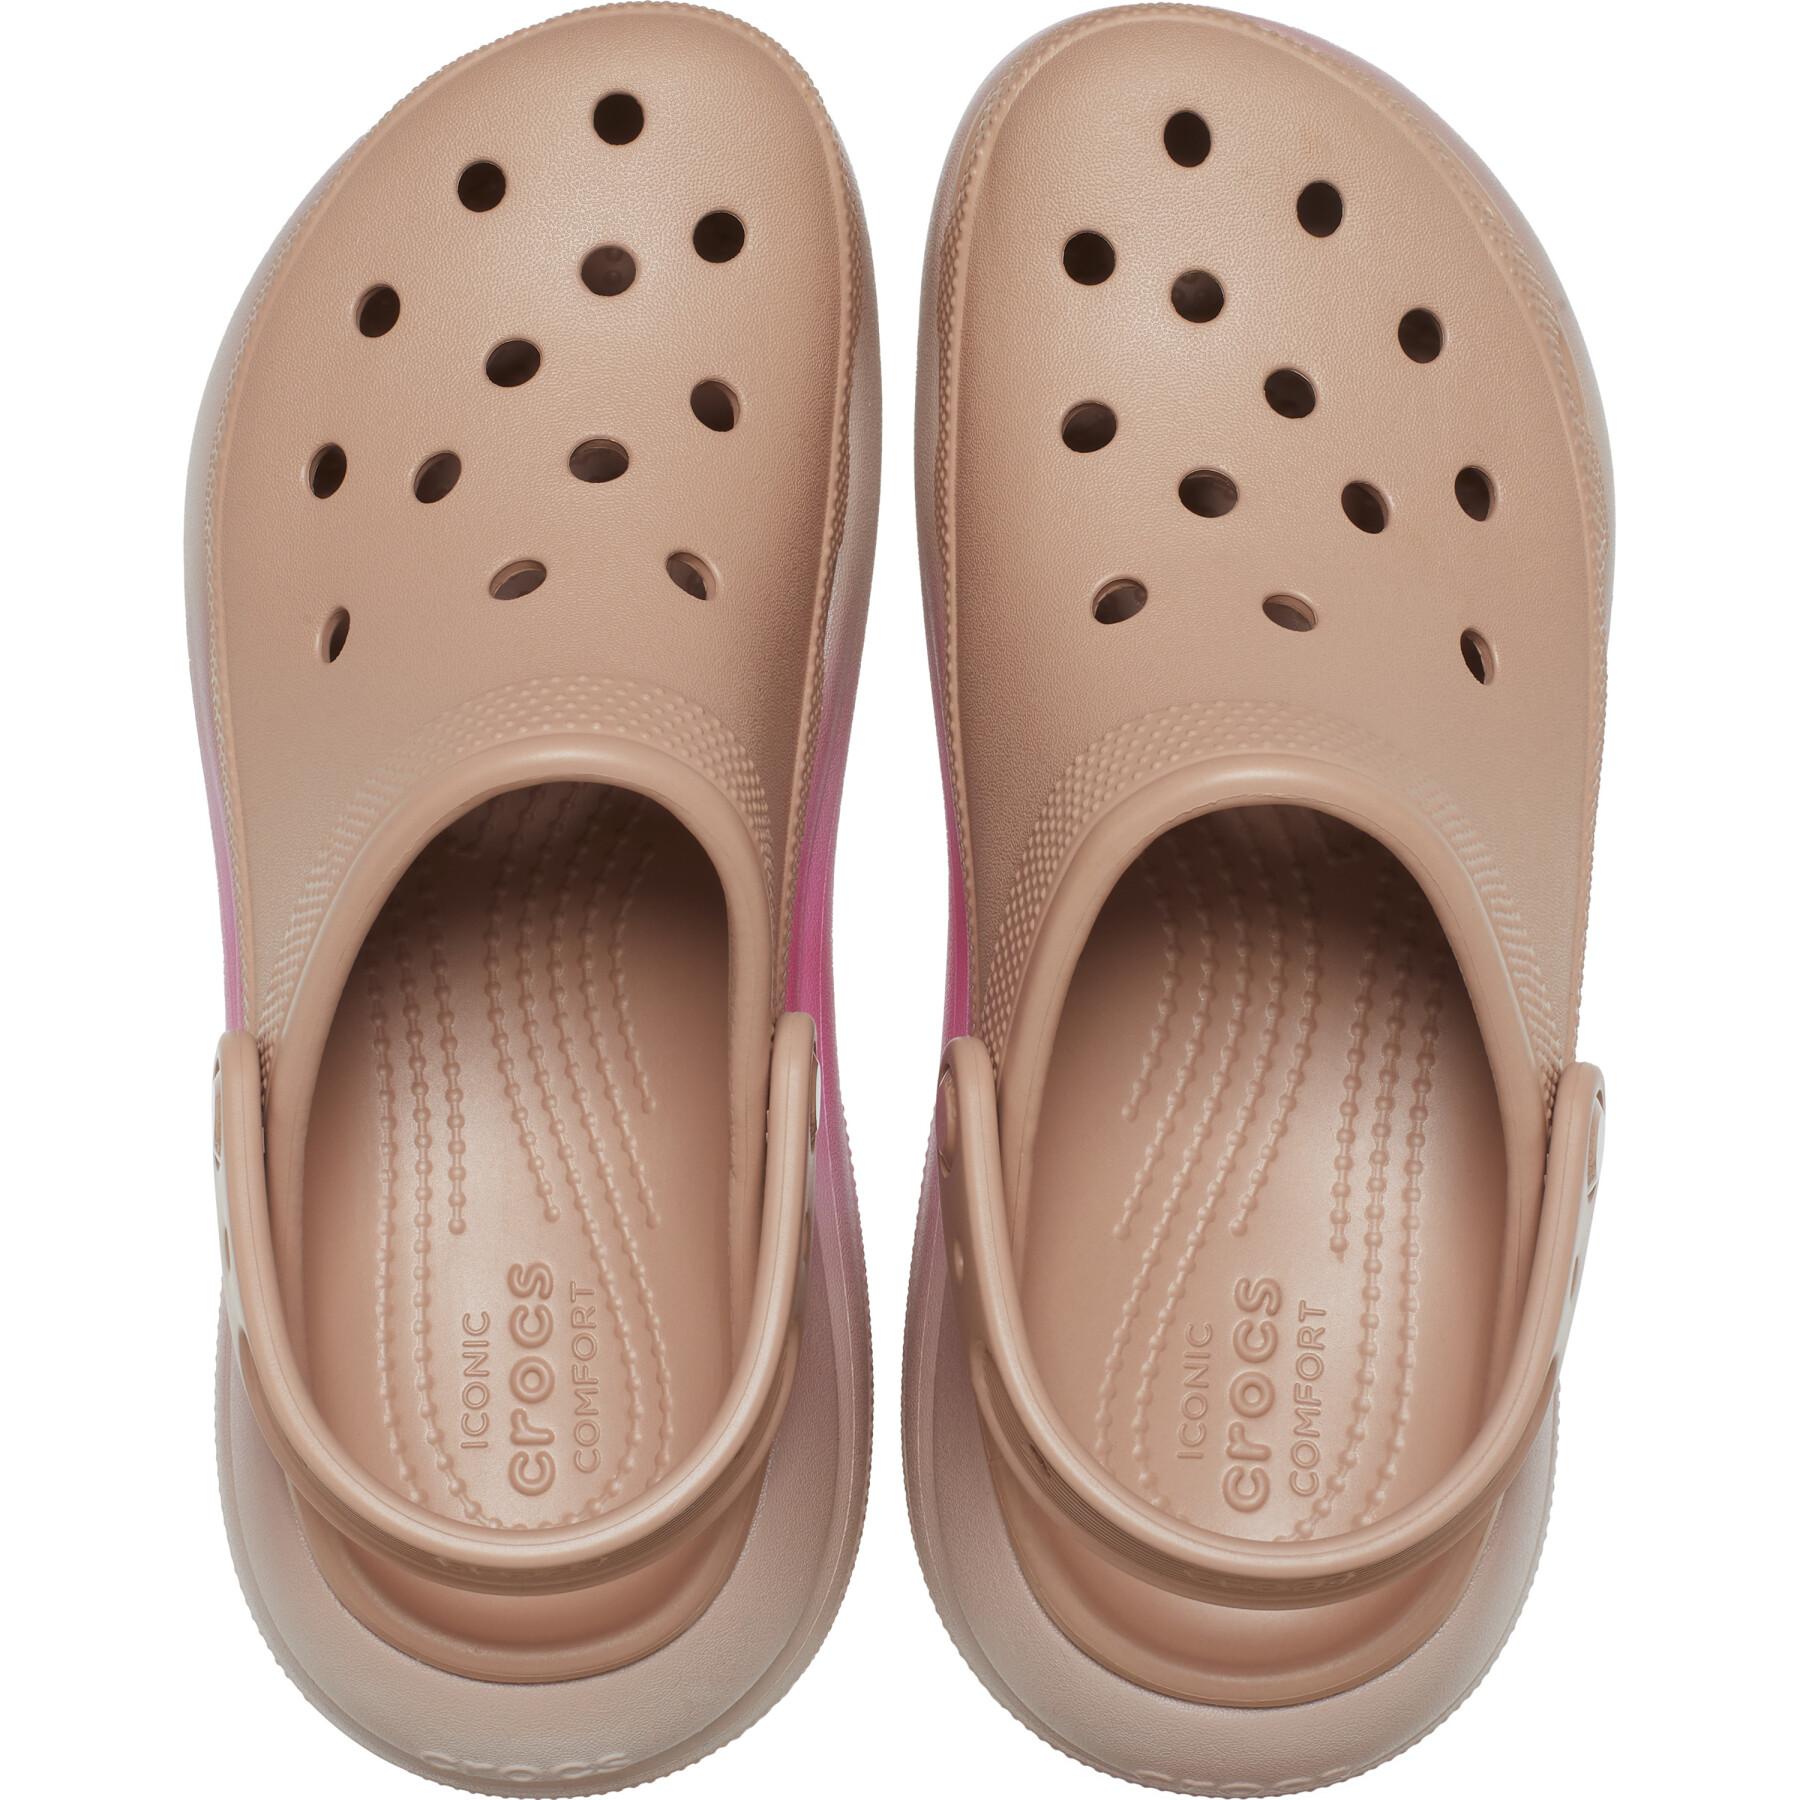 Women's clogs Crocs Crush Color Dip